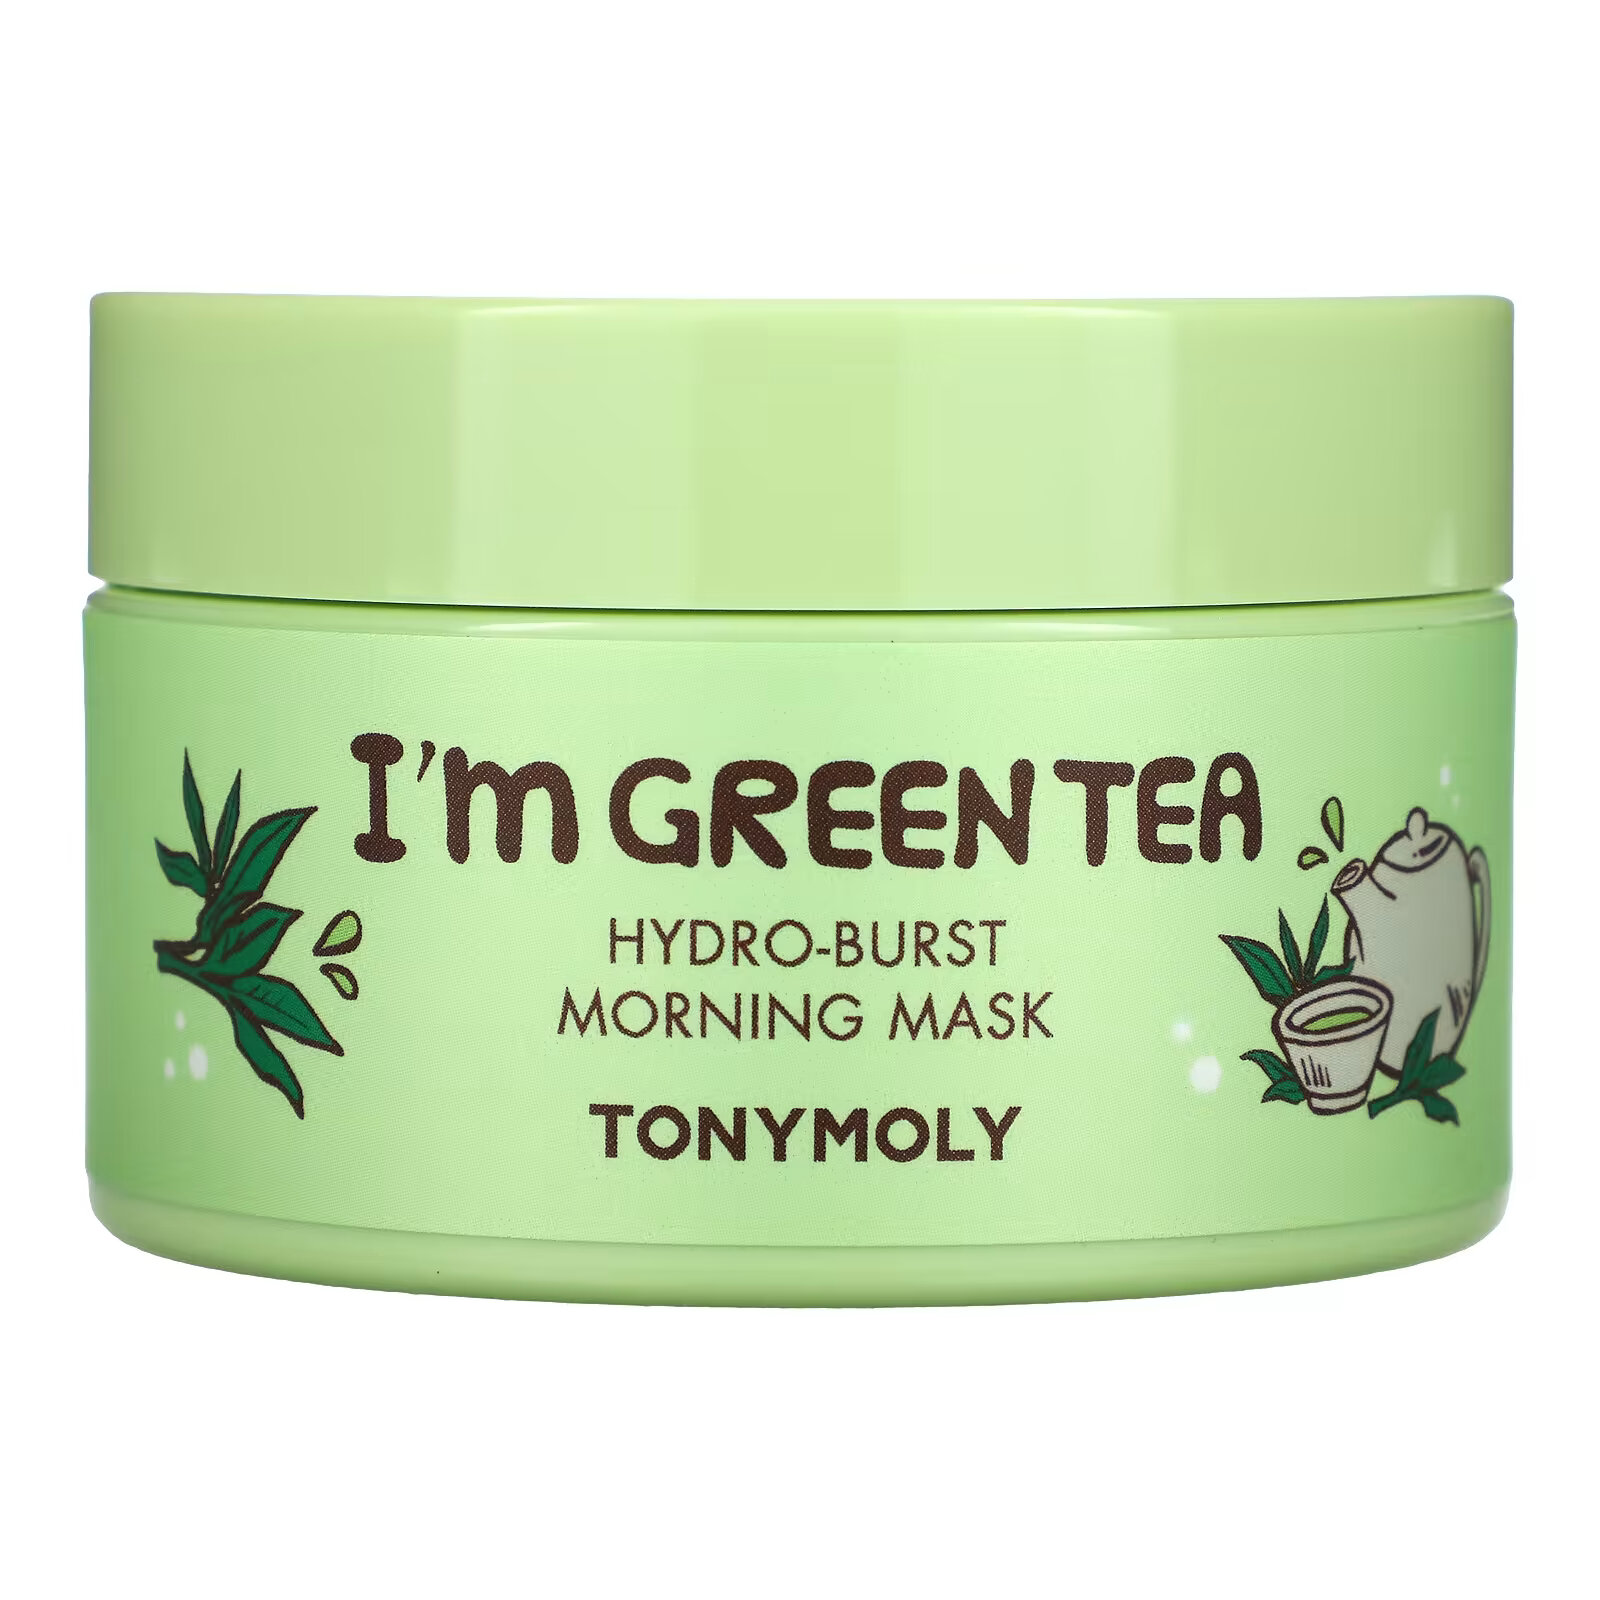 Tony Moly, I'm Green Tea, утренняя маска для лица Hydro-Burst, 100 г (3,52 унции) tony moly i m honey восстанавливающая маска для глубокого увлажнения 100 г 3 52 унции